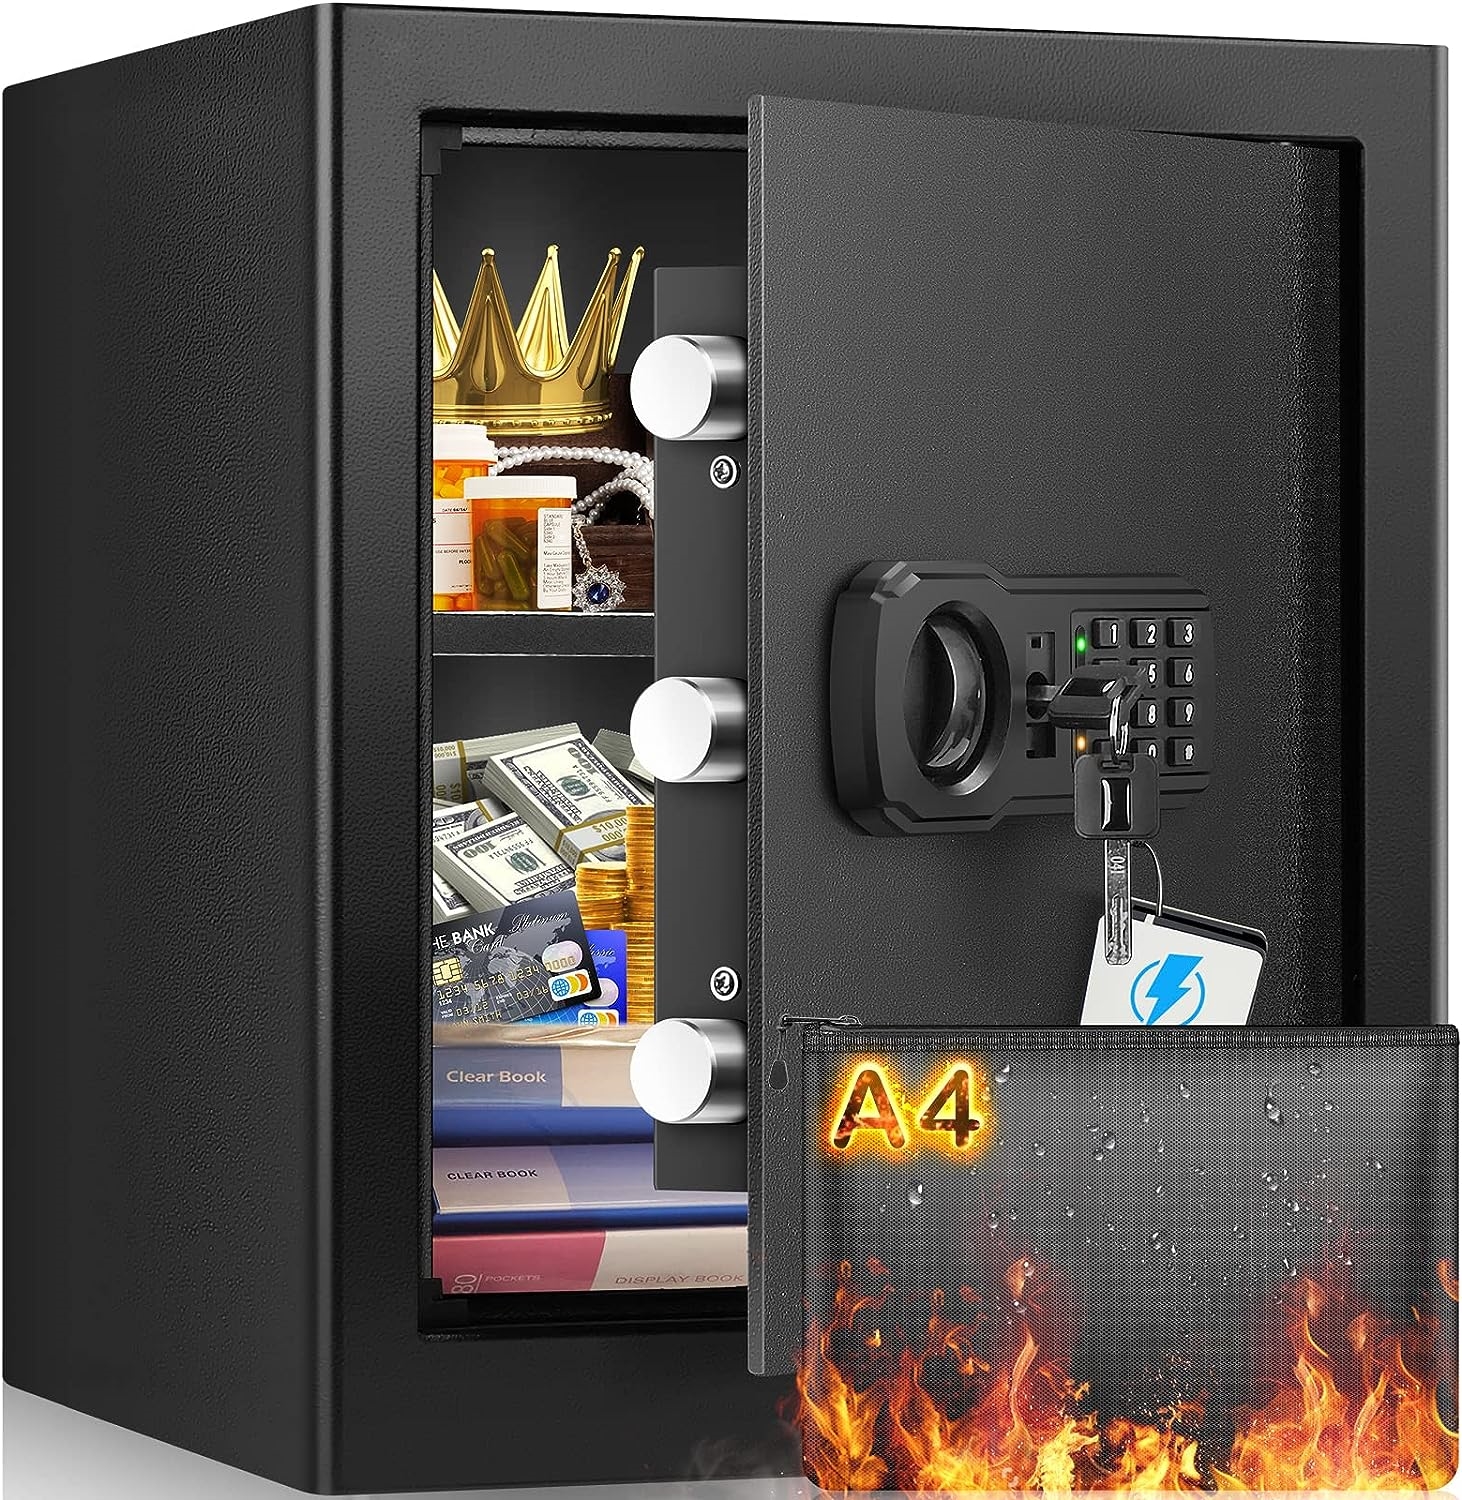 Tiskgg 1.8 Cubic Fireproof Safe for Money | DeviceDaily.com